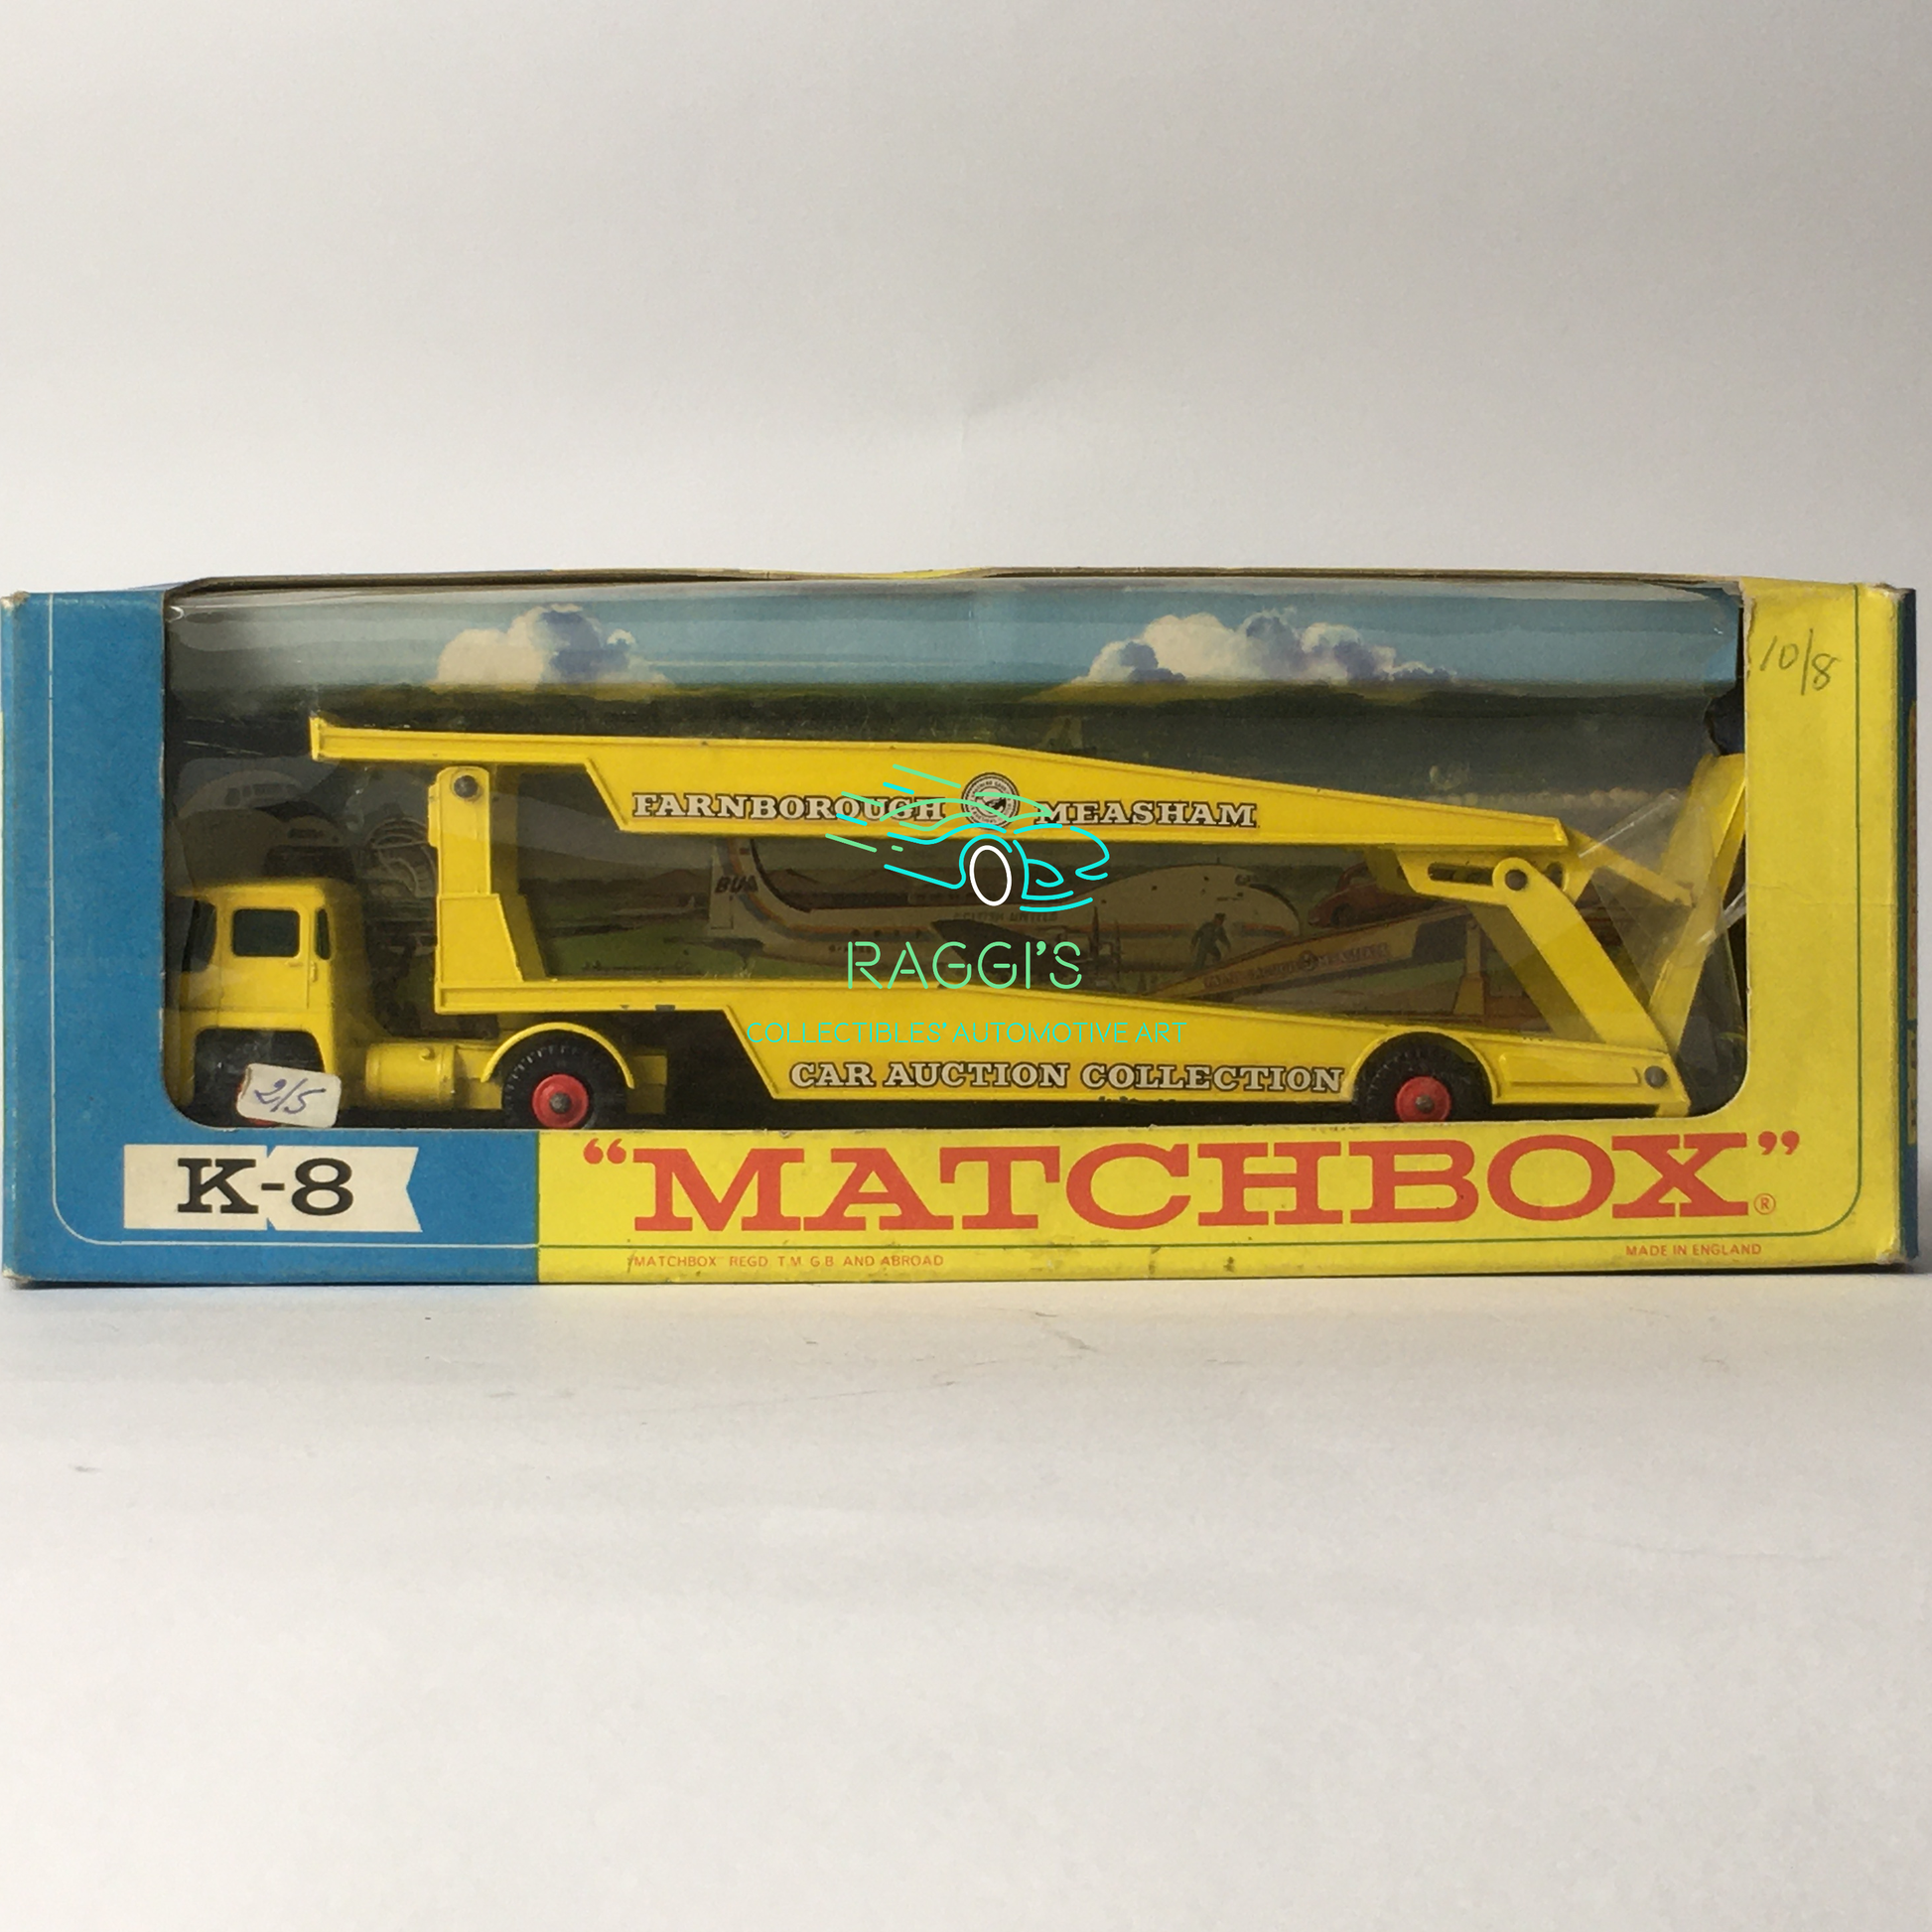 Matchbox, Modellini in Metallo Pressofuso Matchbox K-8 King Size Car Trasportation Yellow - Raggi's Collectibles' Automotive Art